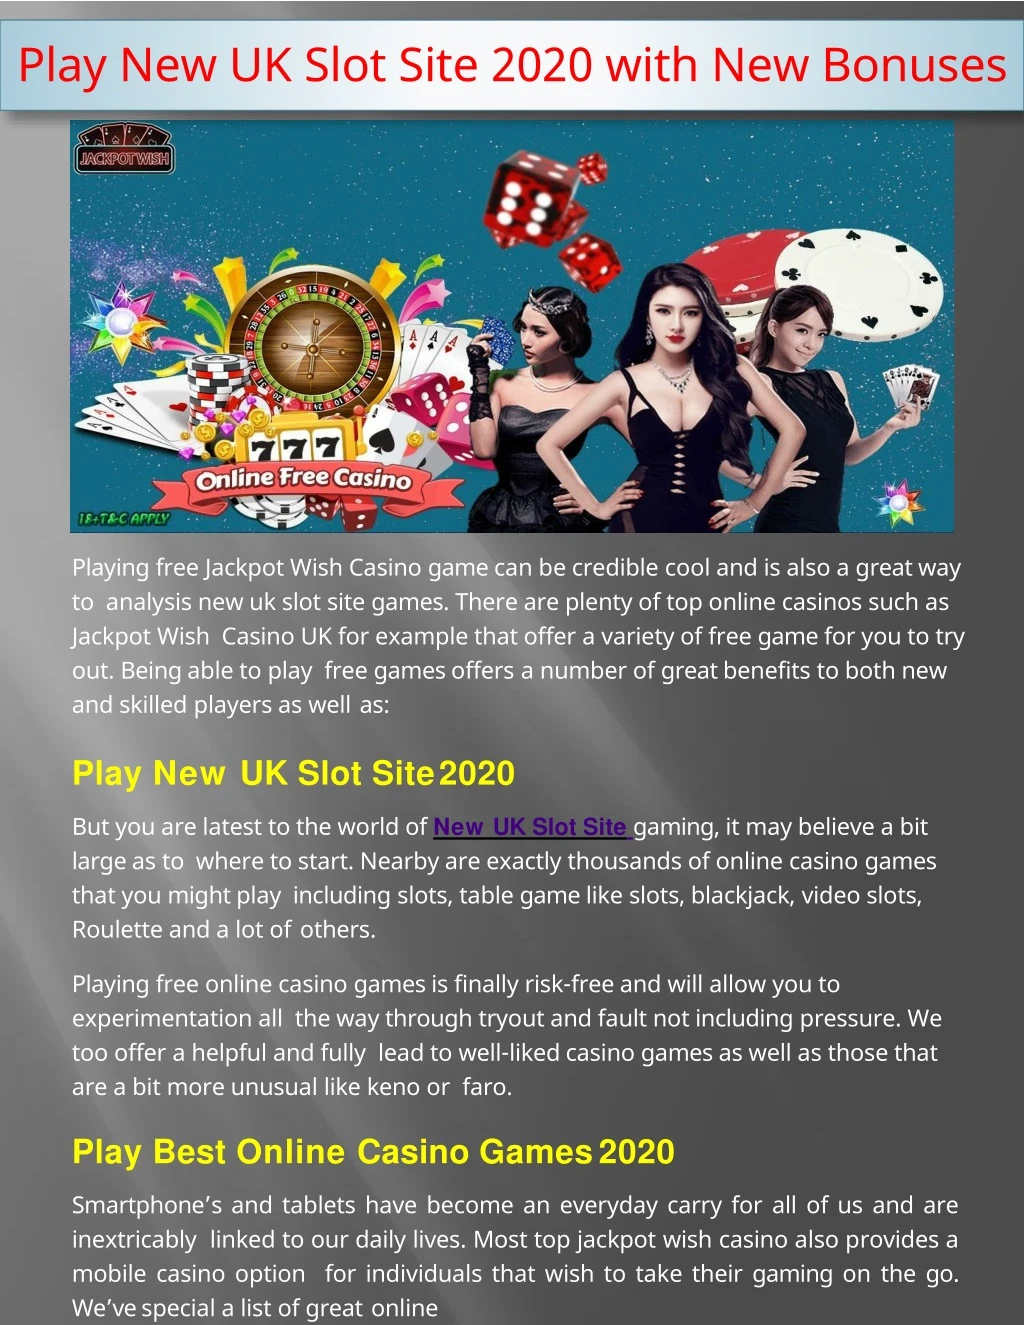 play new uk slot site 2020 with new bonuses